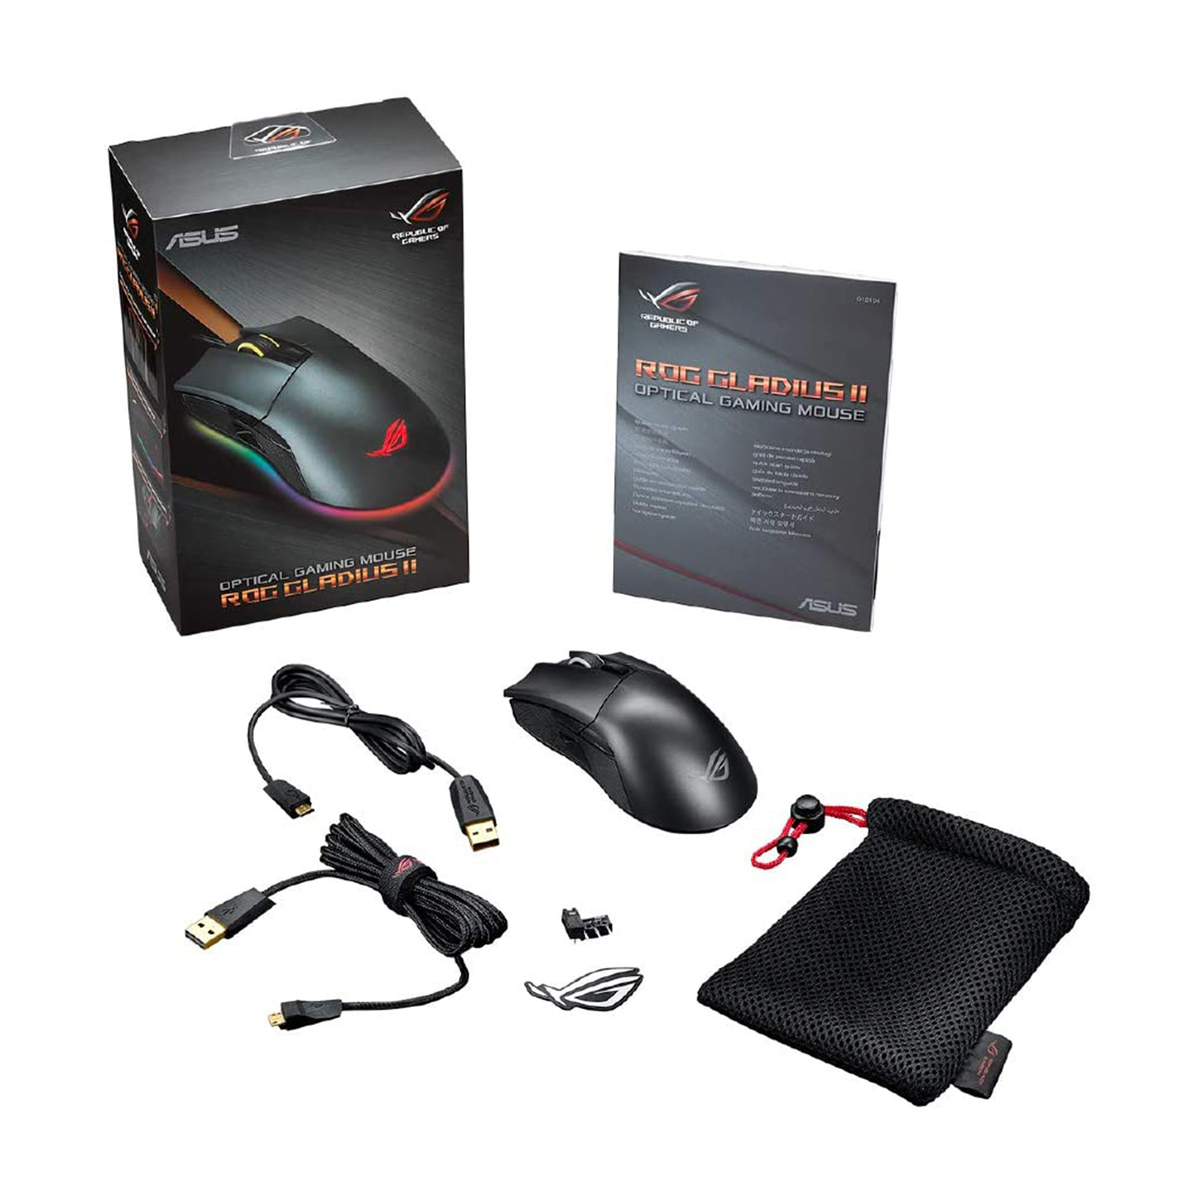 Asus Optical Gaming Mouse P502 ROG Gladius II